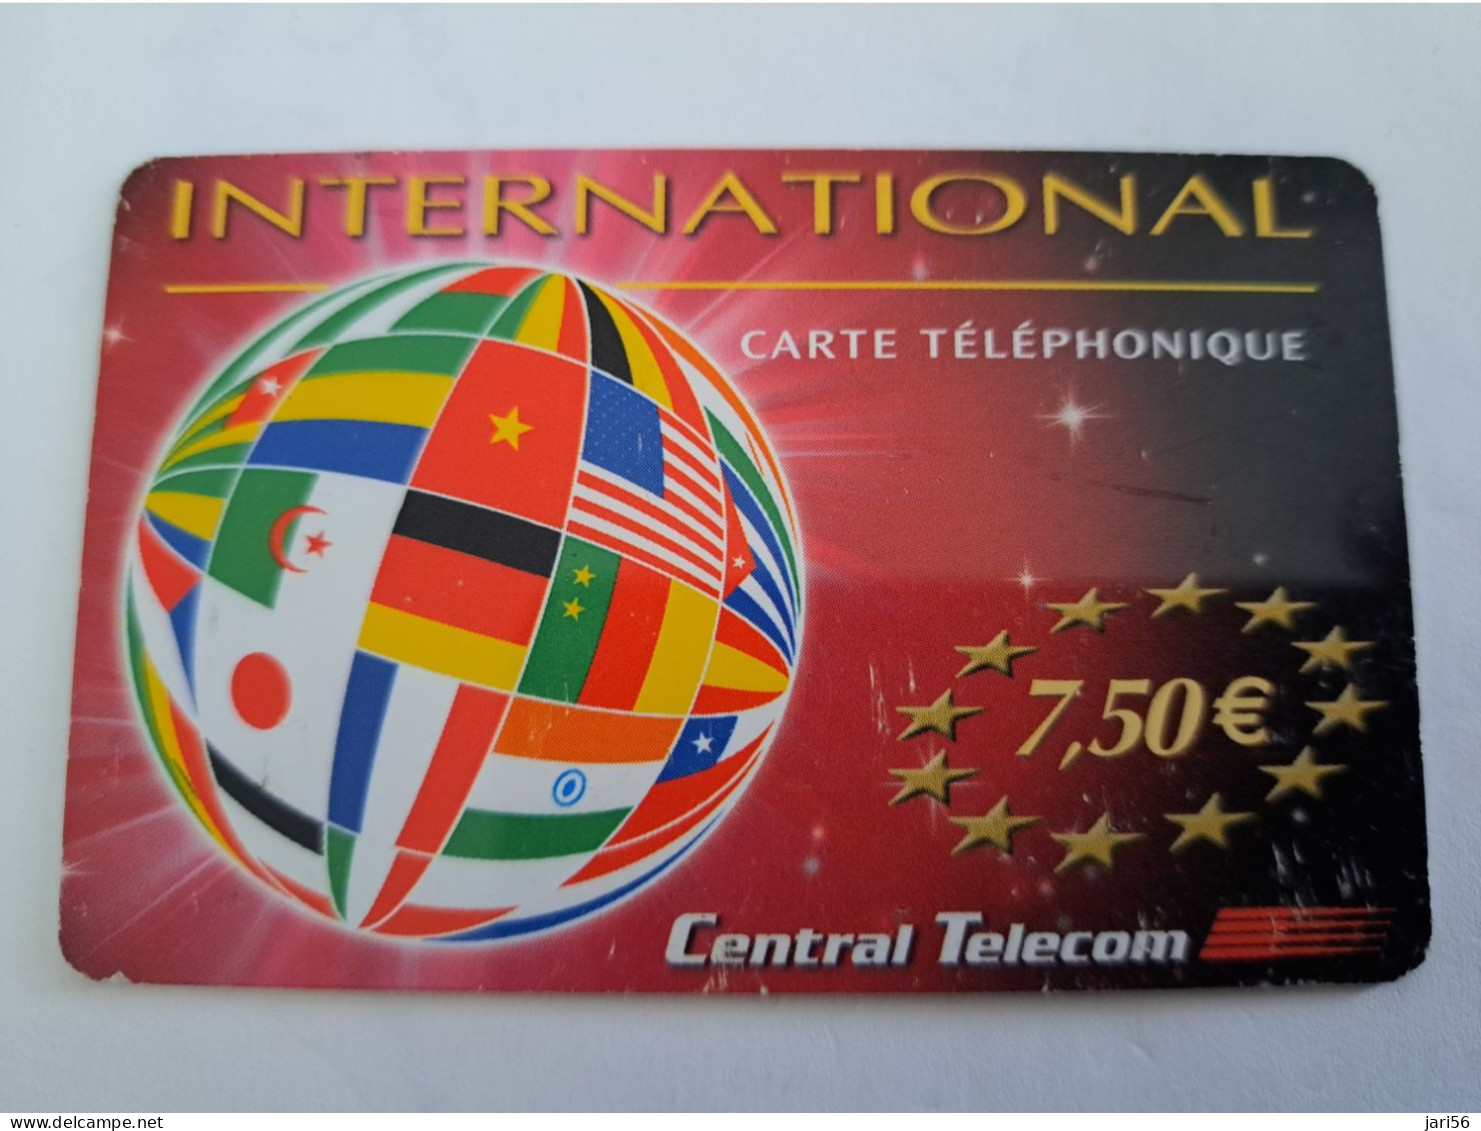 FRANCE/FRANKRIJK  /€ 7,50 /  CENTRAL TELECOM  / COUNTRY FLAGS/ PREPAID  USED    ** 14671** - Mobicartes (GSM/SIM)